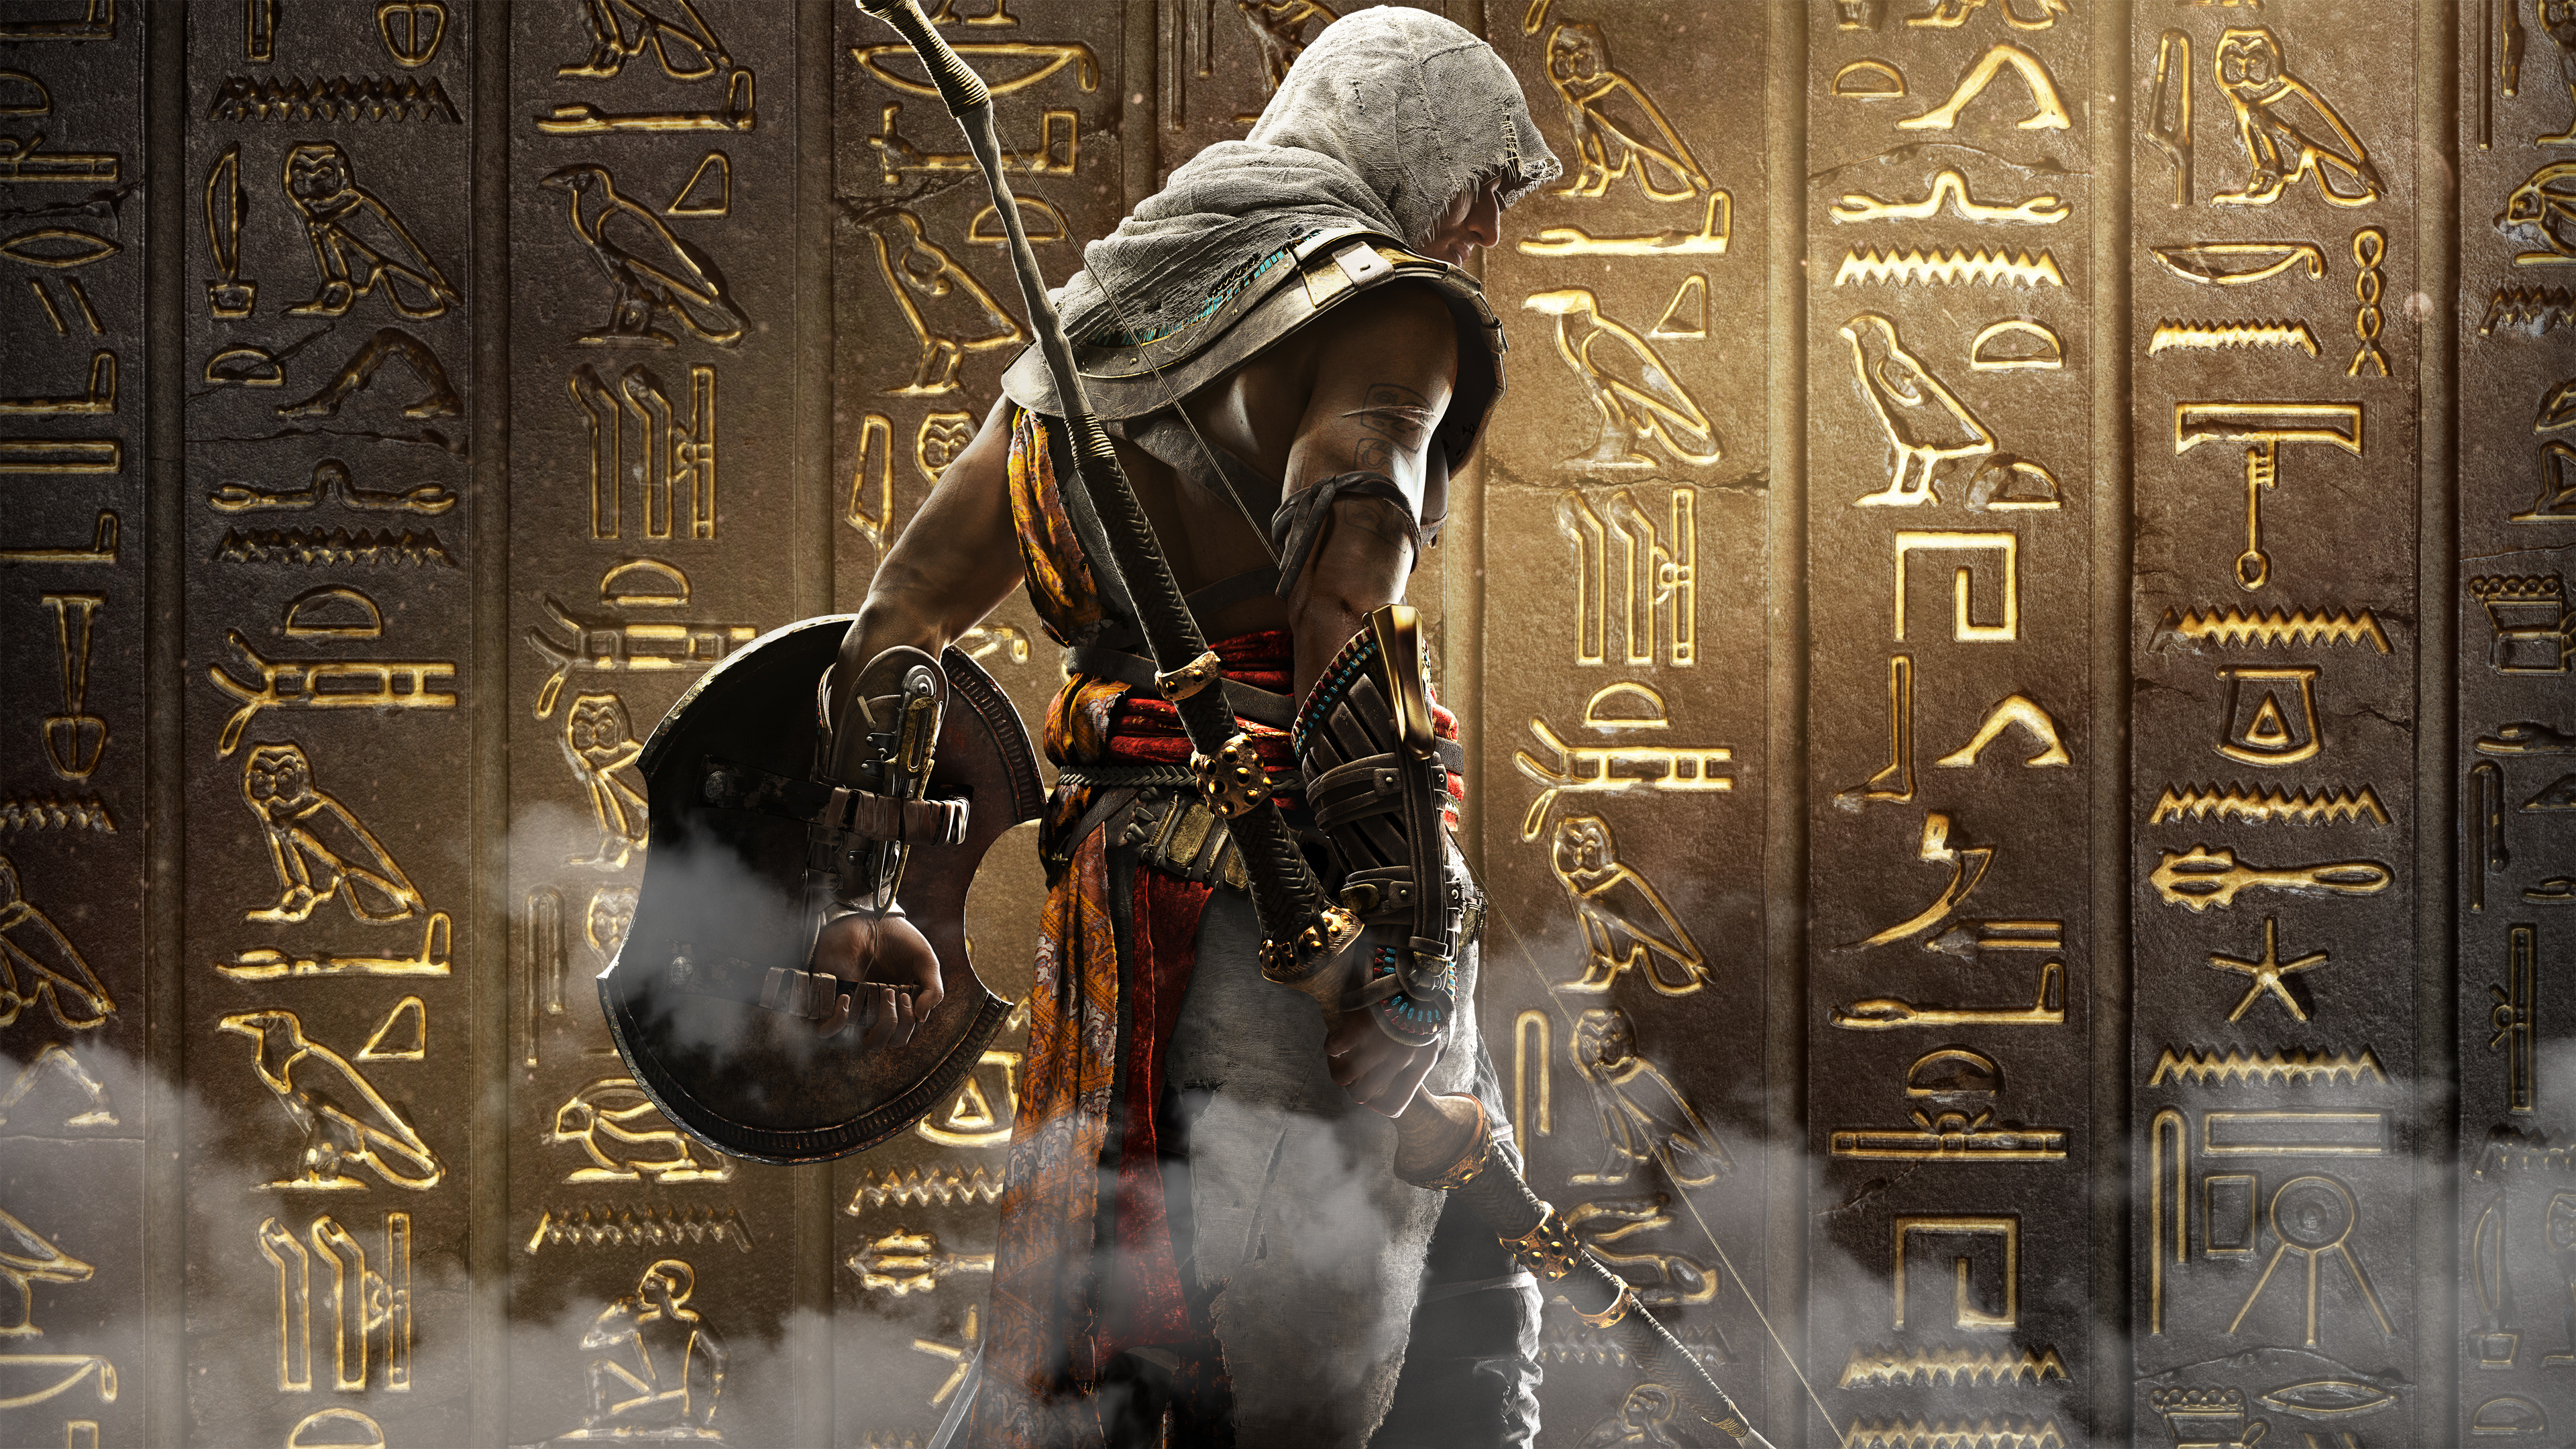 Wallpaper Origins, Ubisoft, Assassin's Creed, DLC, Assassin's Creed: Origins,  Roman Centurion for mobile and desktop, section игры, resolution 1920x1080  - download